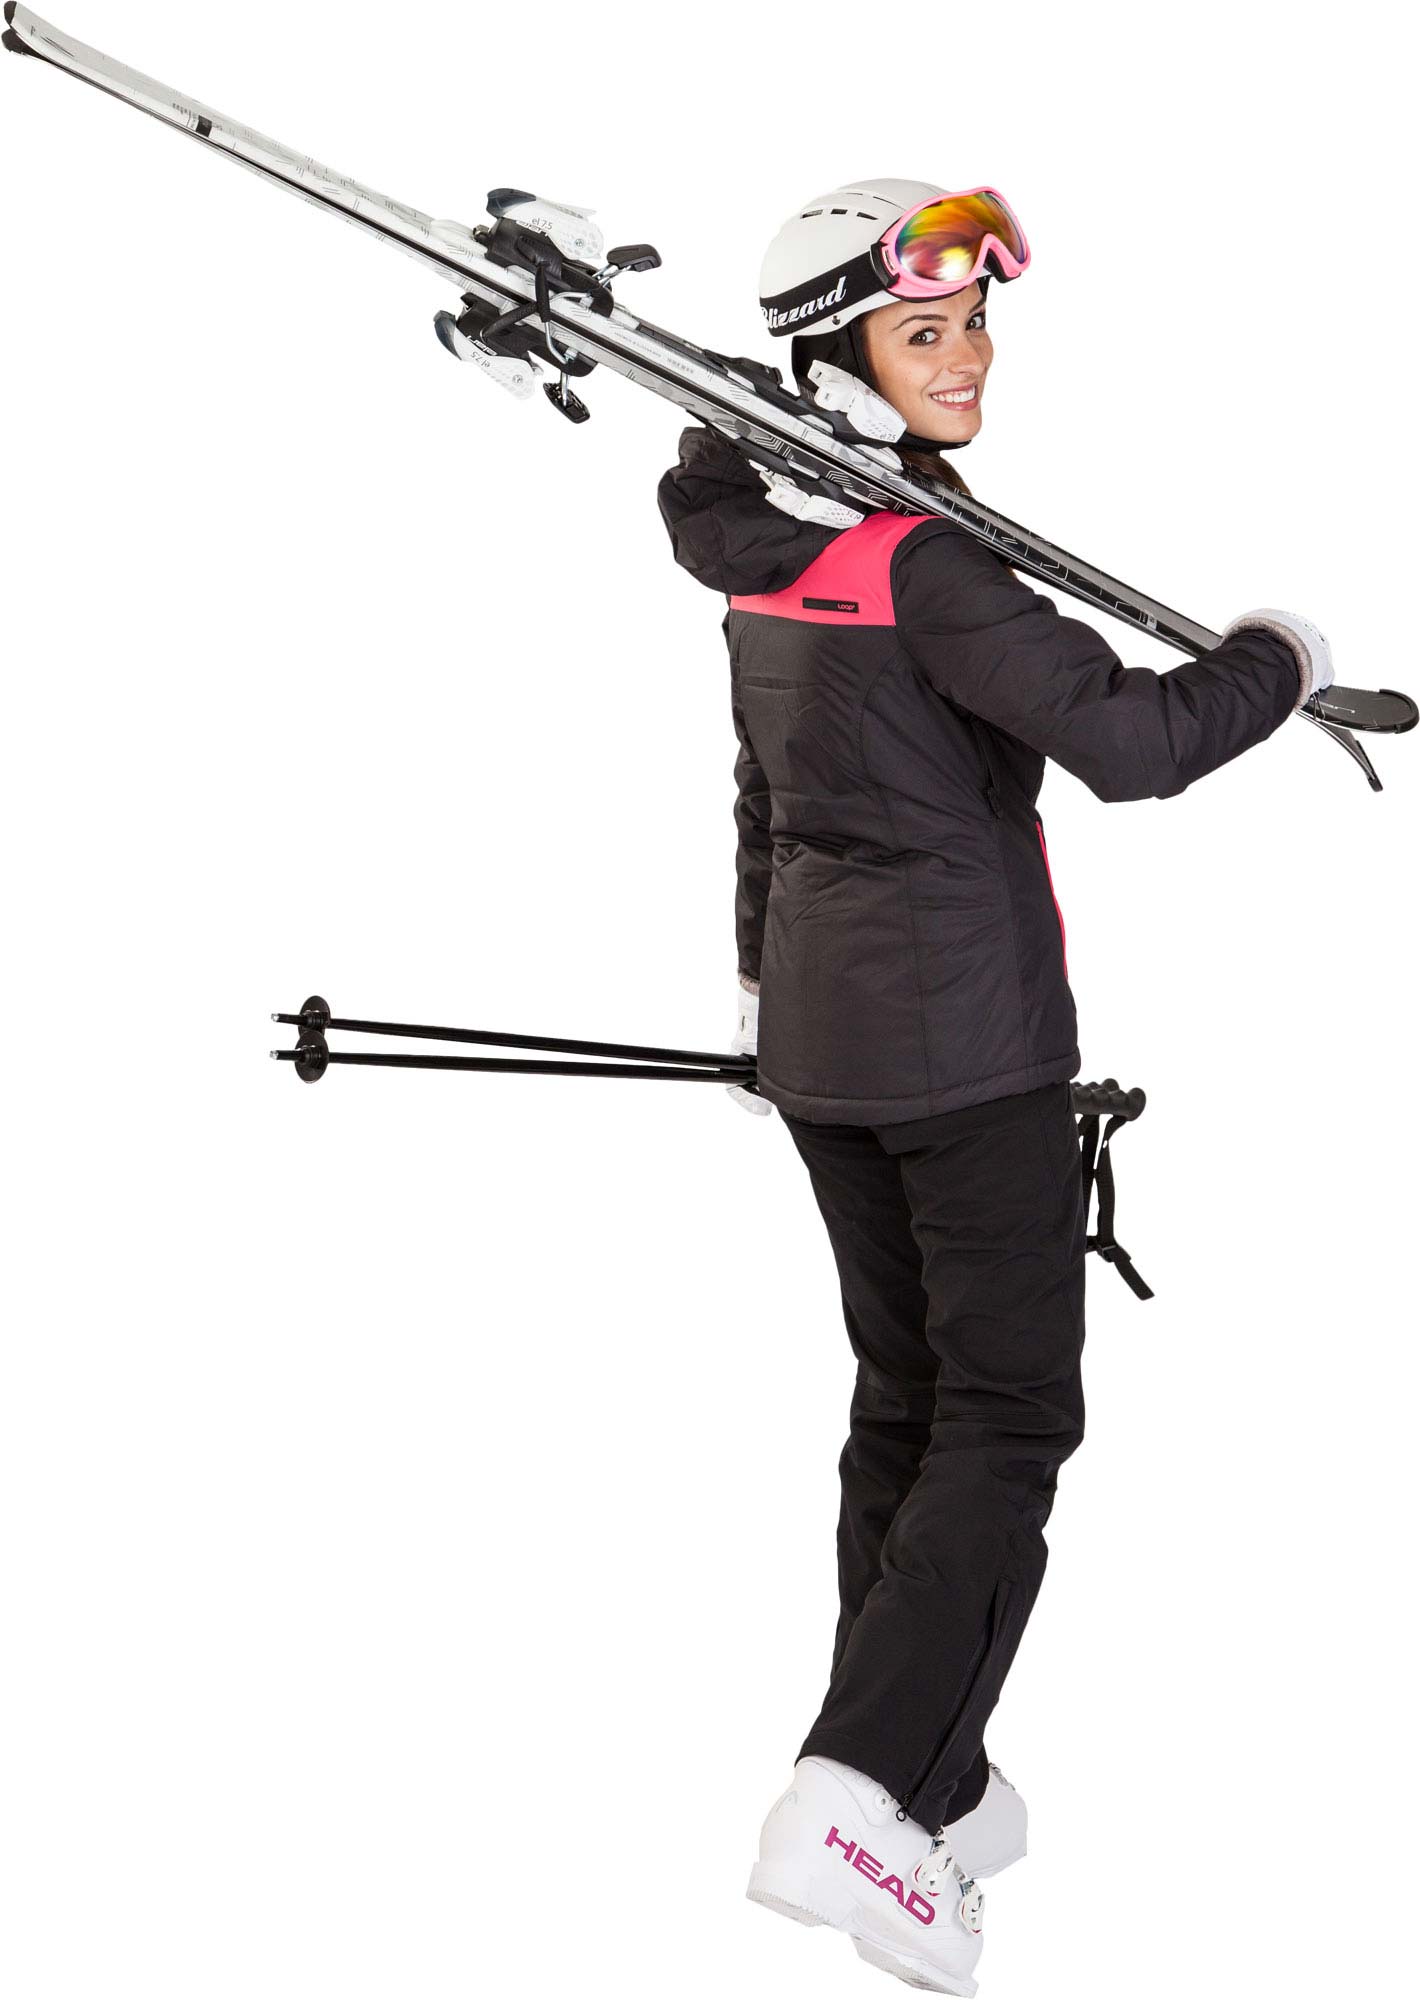 SISINA - Women's Ski Jacket